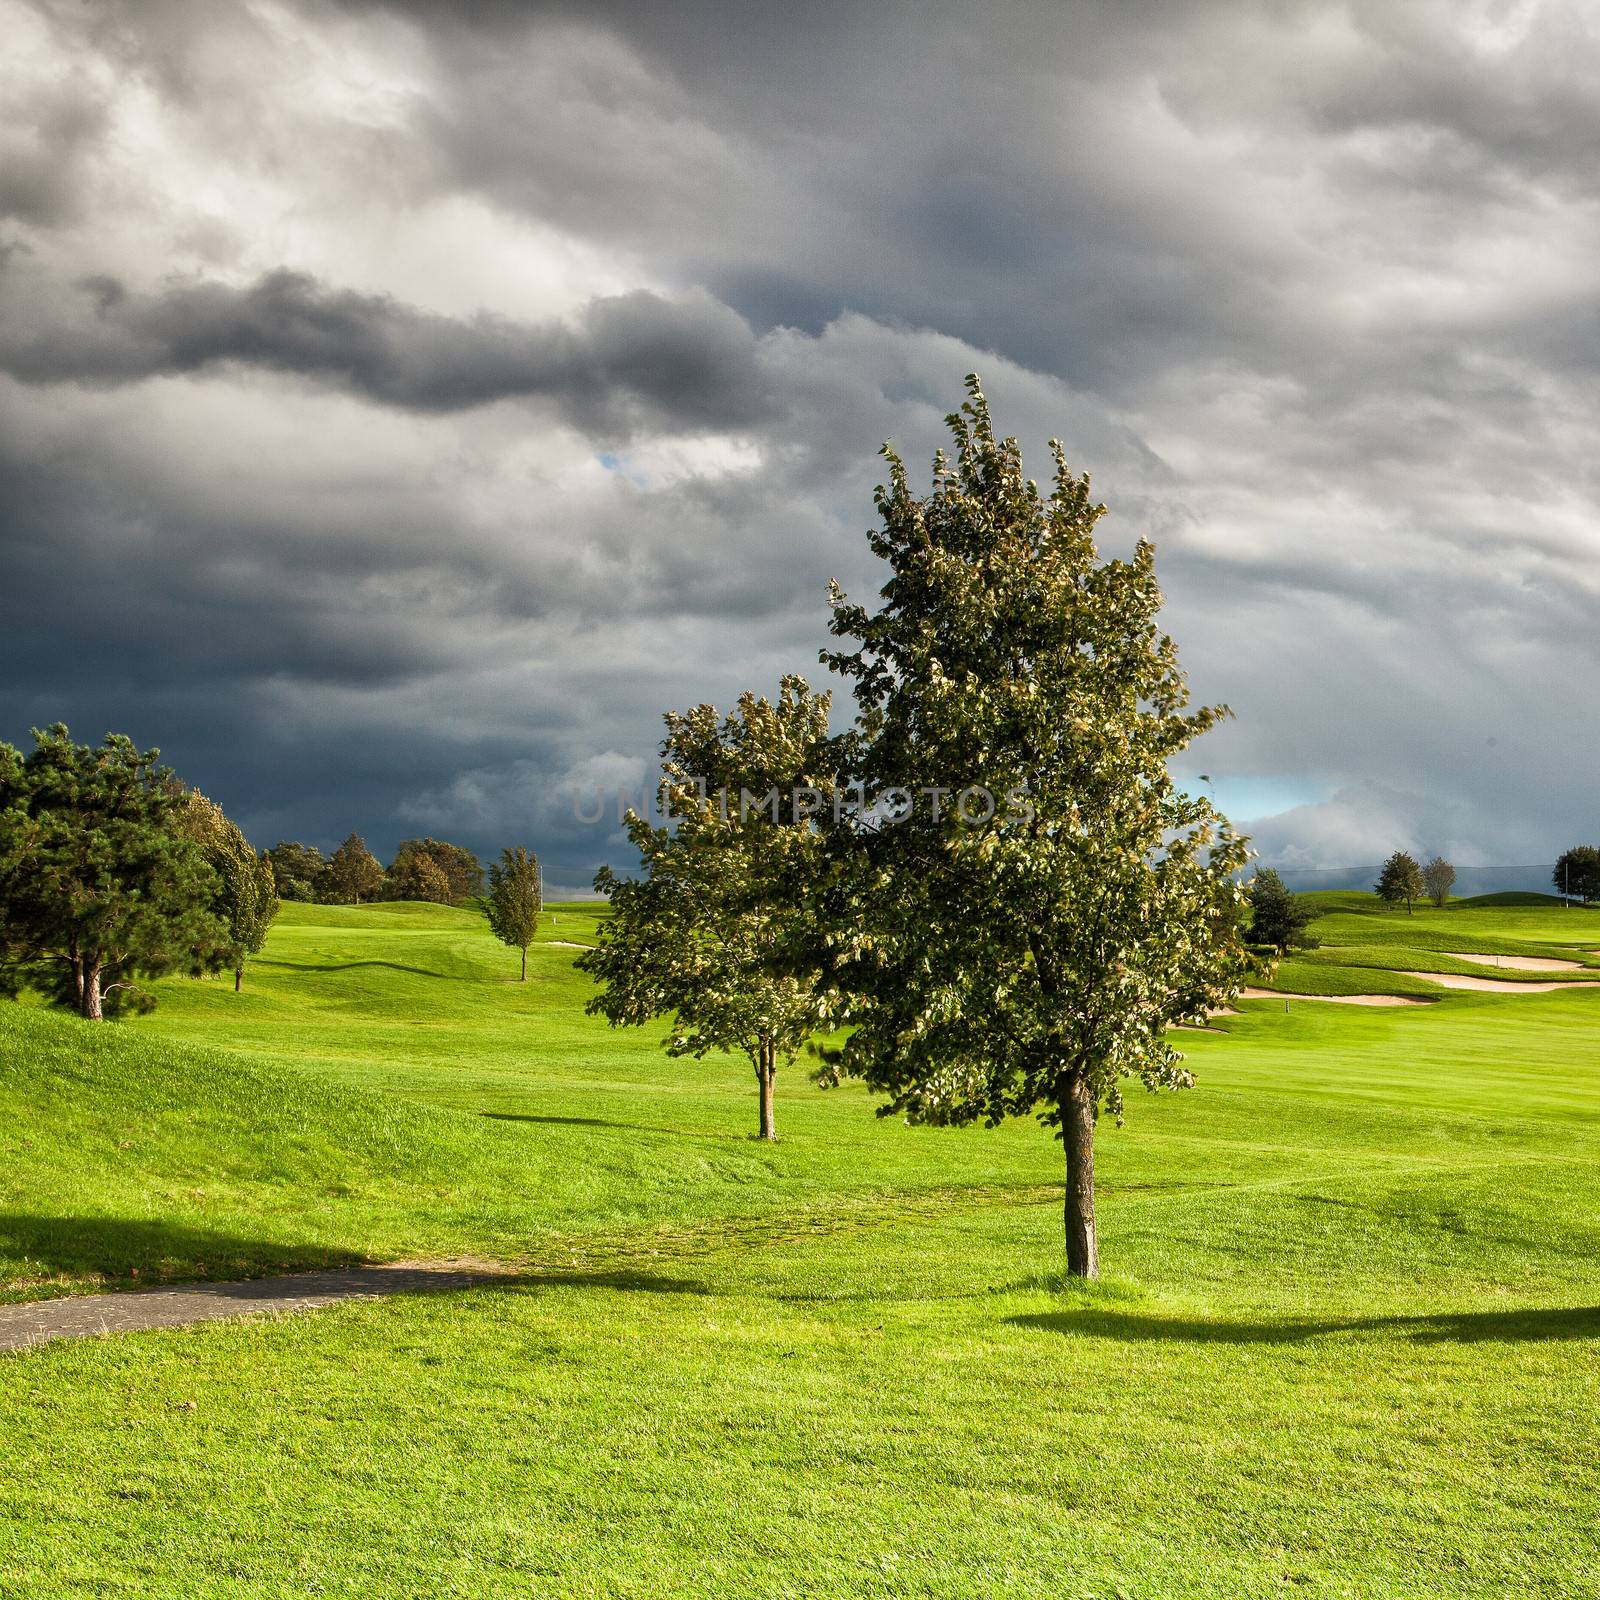 Summer golf course after storm